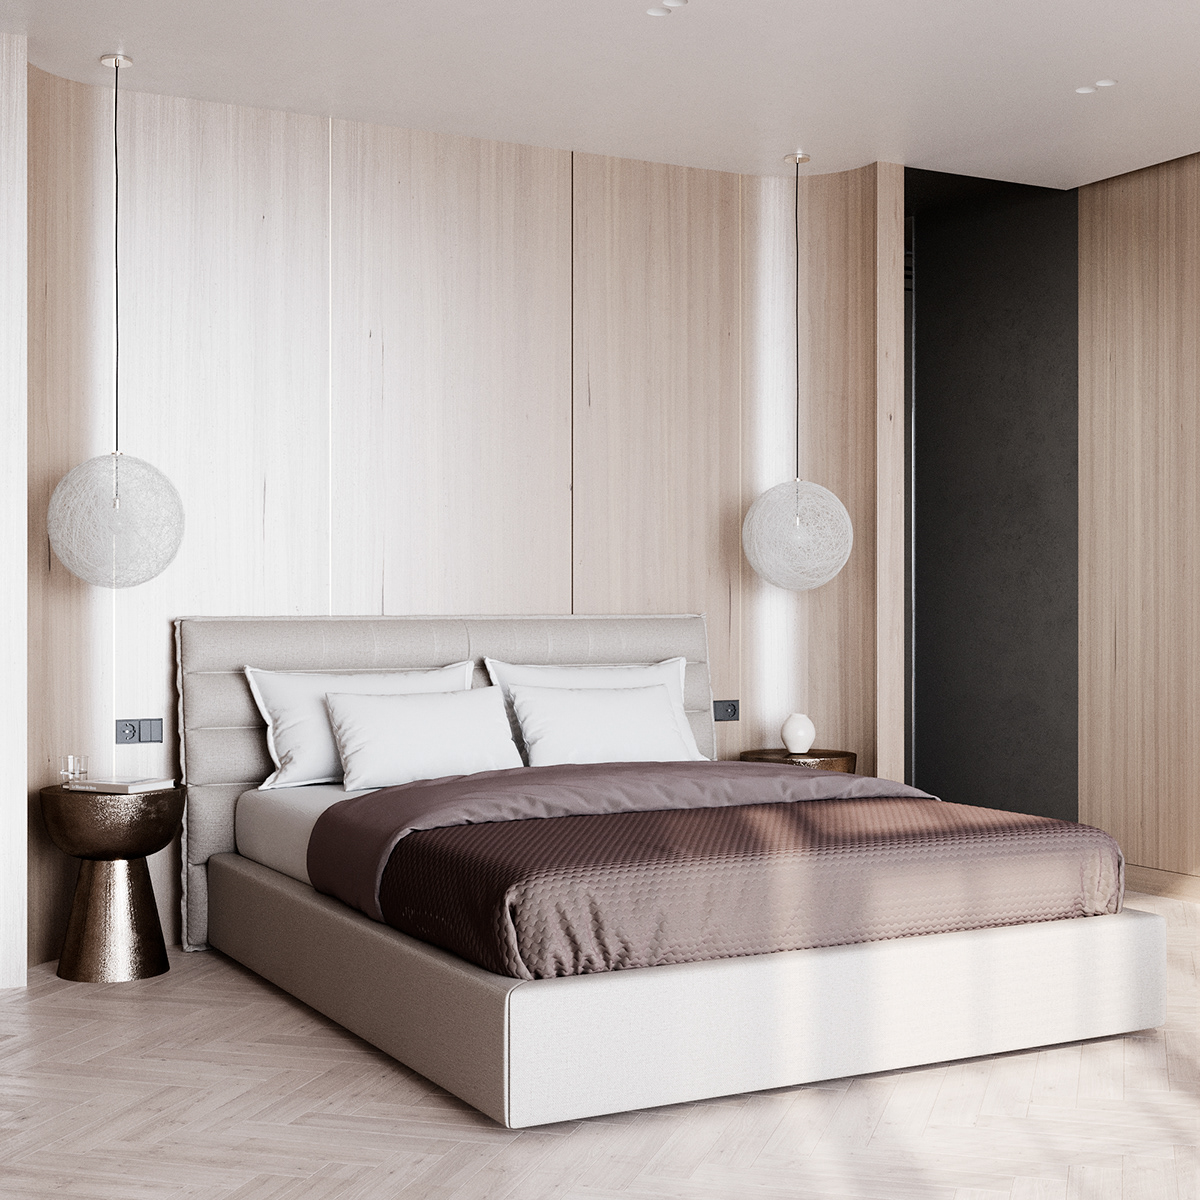 3ds max archviz bedroom CGI corona indoor Interior interior design  Render visualization